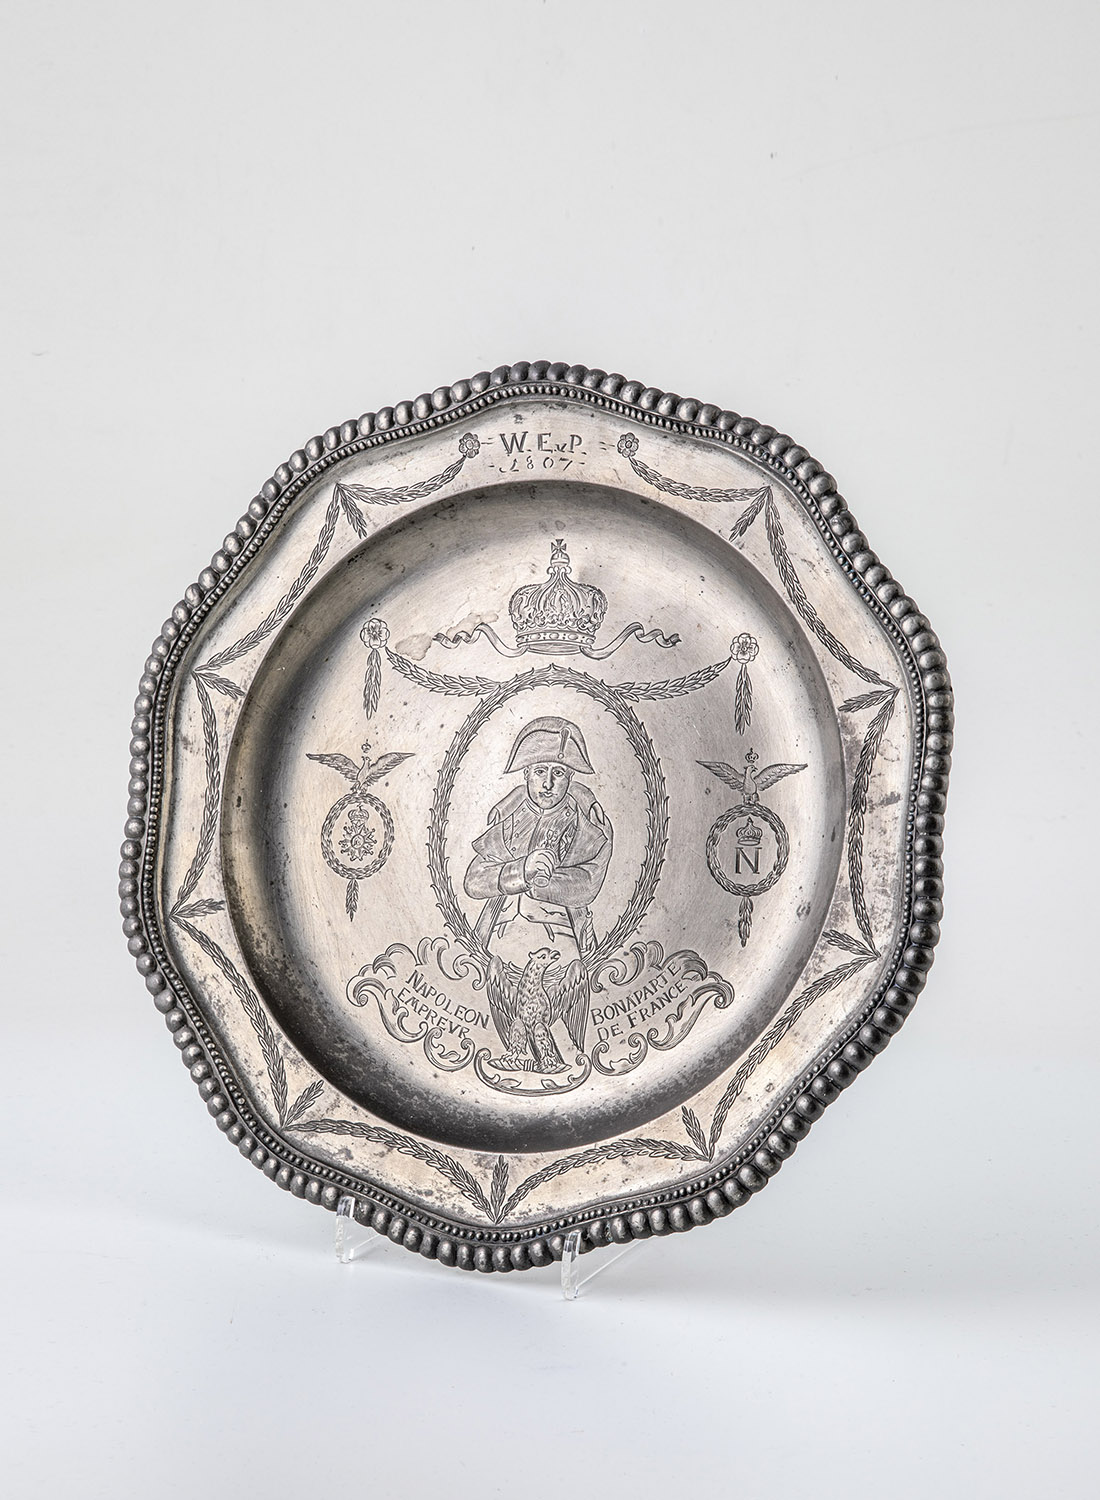 Pewter plate with Napoleon Bonaparte